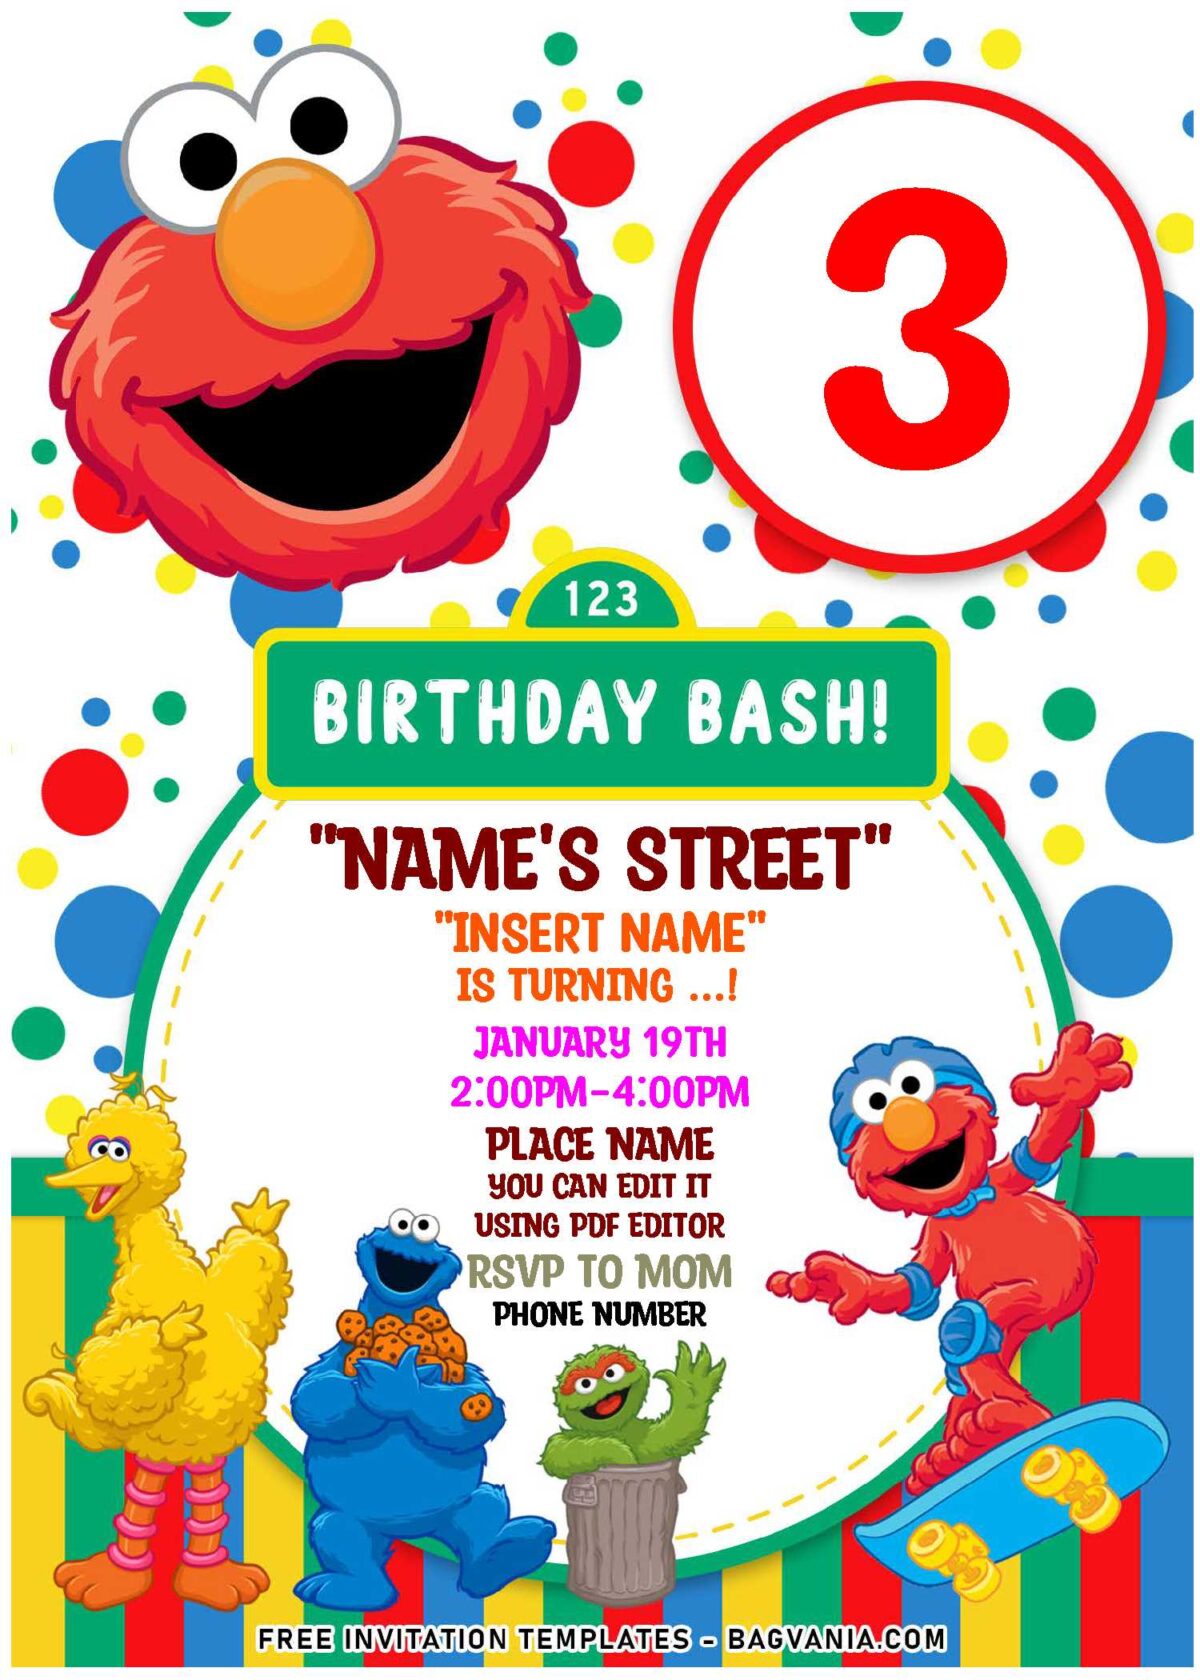 (Free Editable PDF) Super Cute Sesame Street Birthday Invitation Templates with adorable skateboarding Elmo